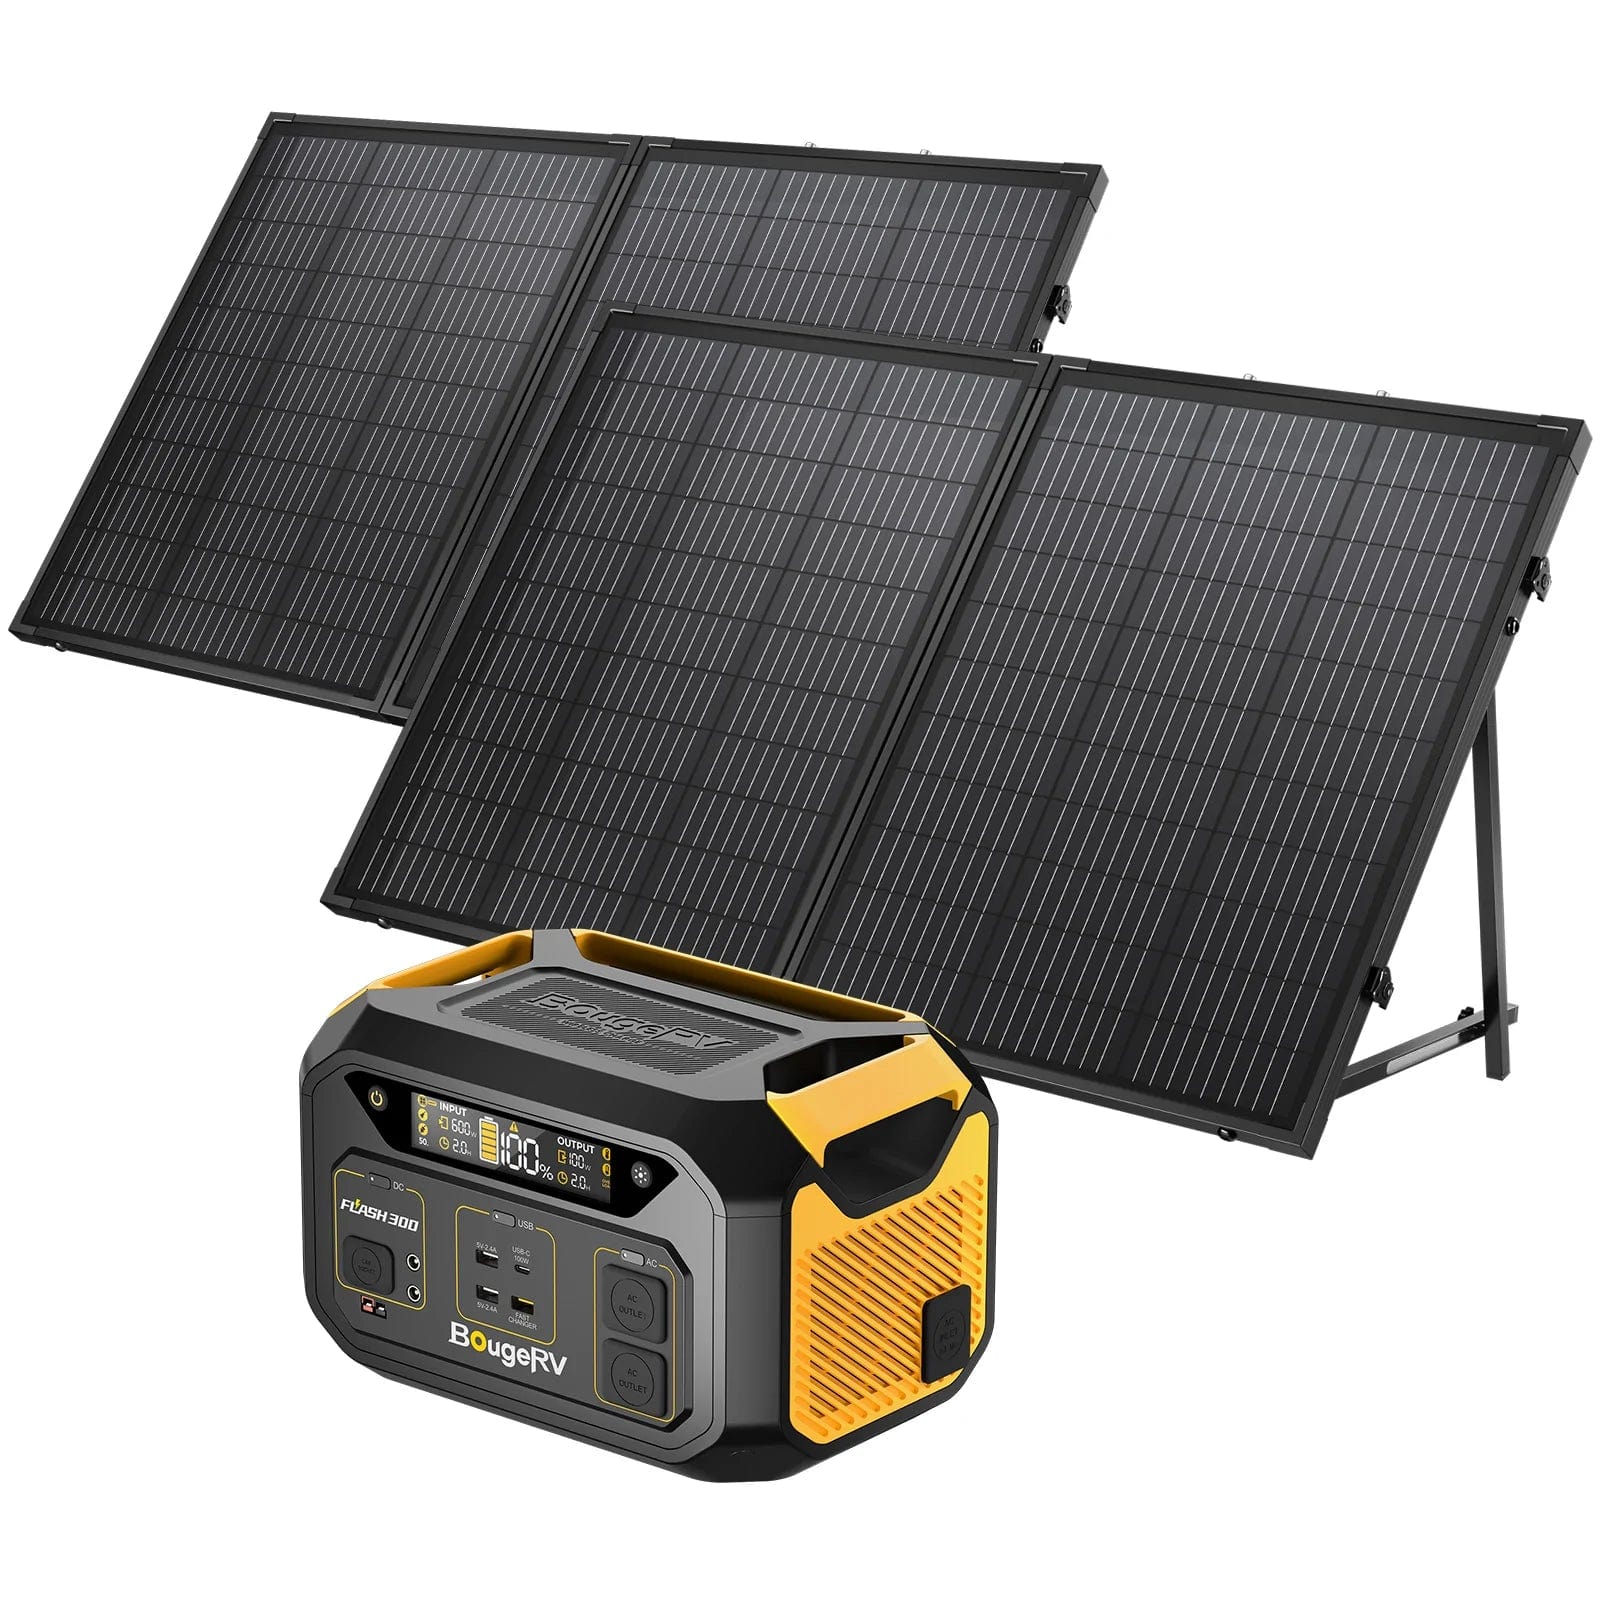 BougeRV Flash300 286Wh + 2x 130W Solar Panel Solar Generator Kit